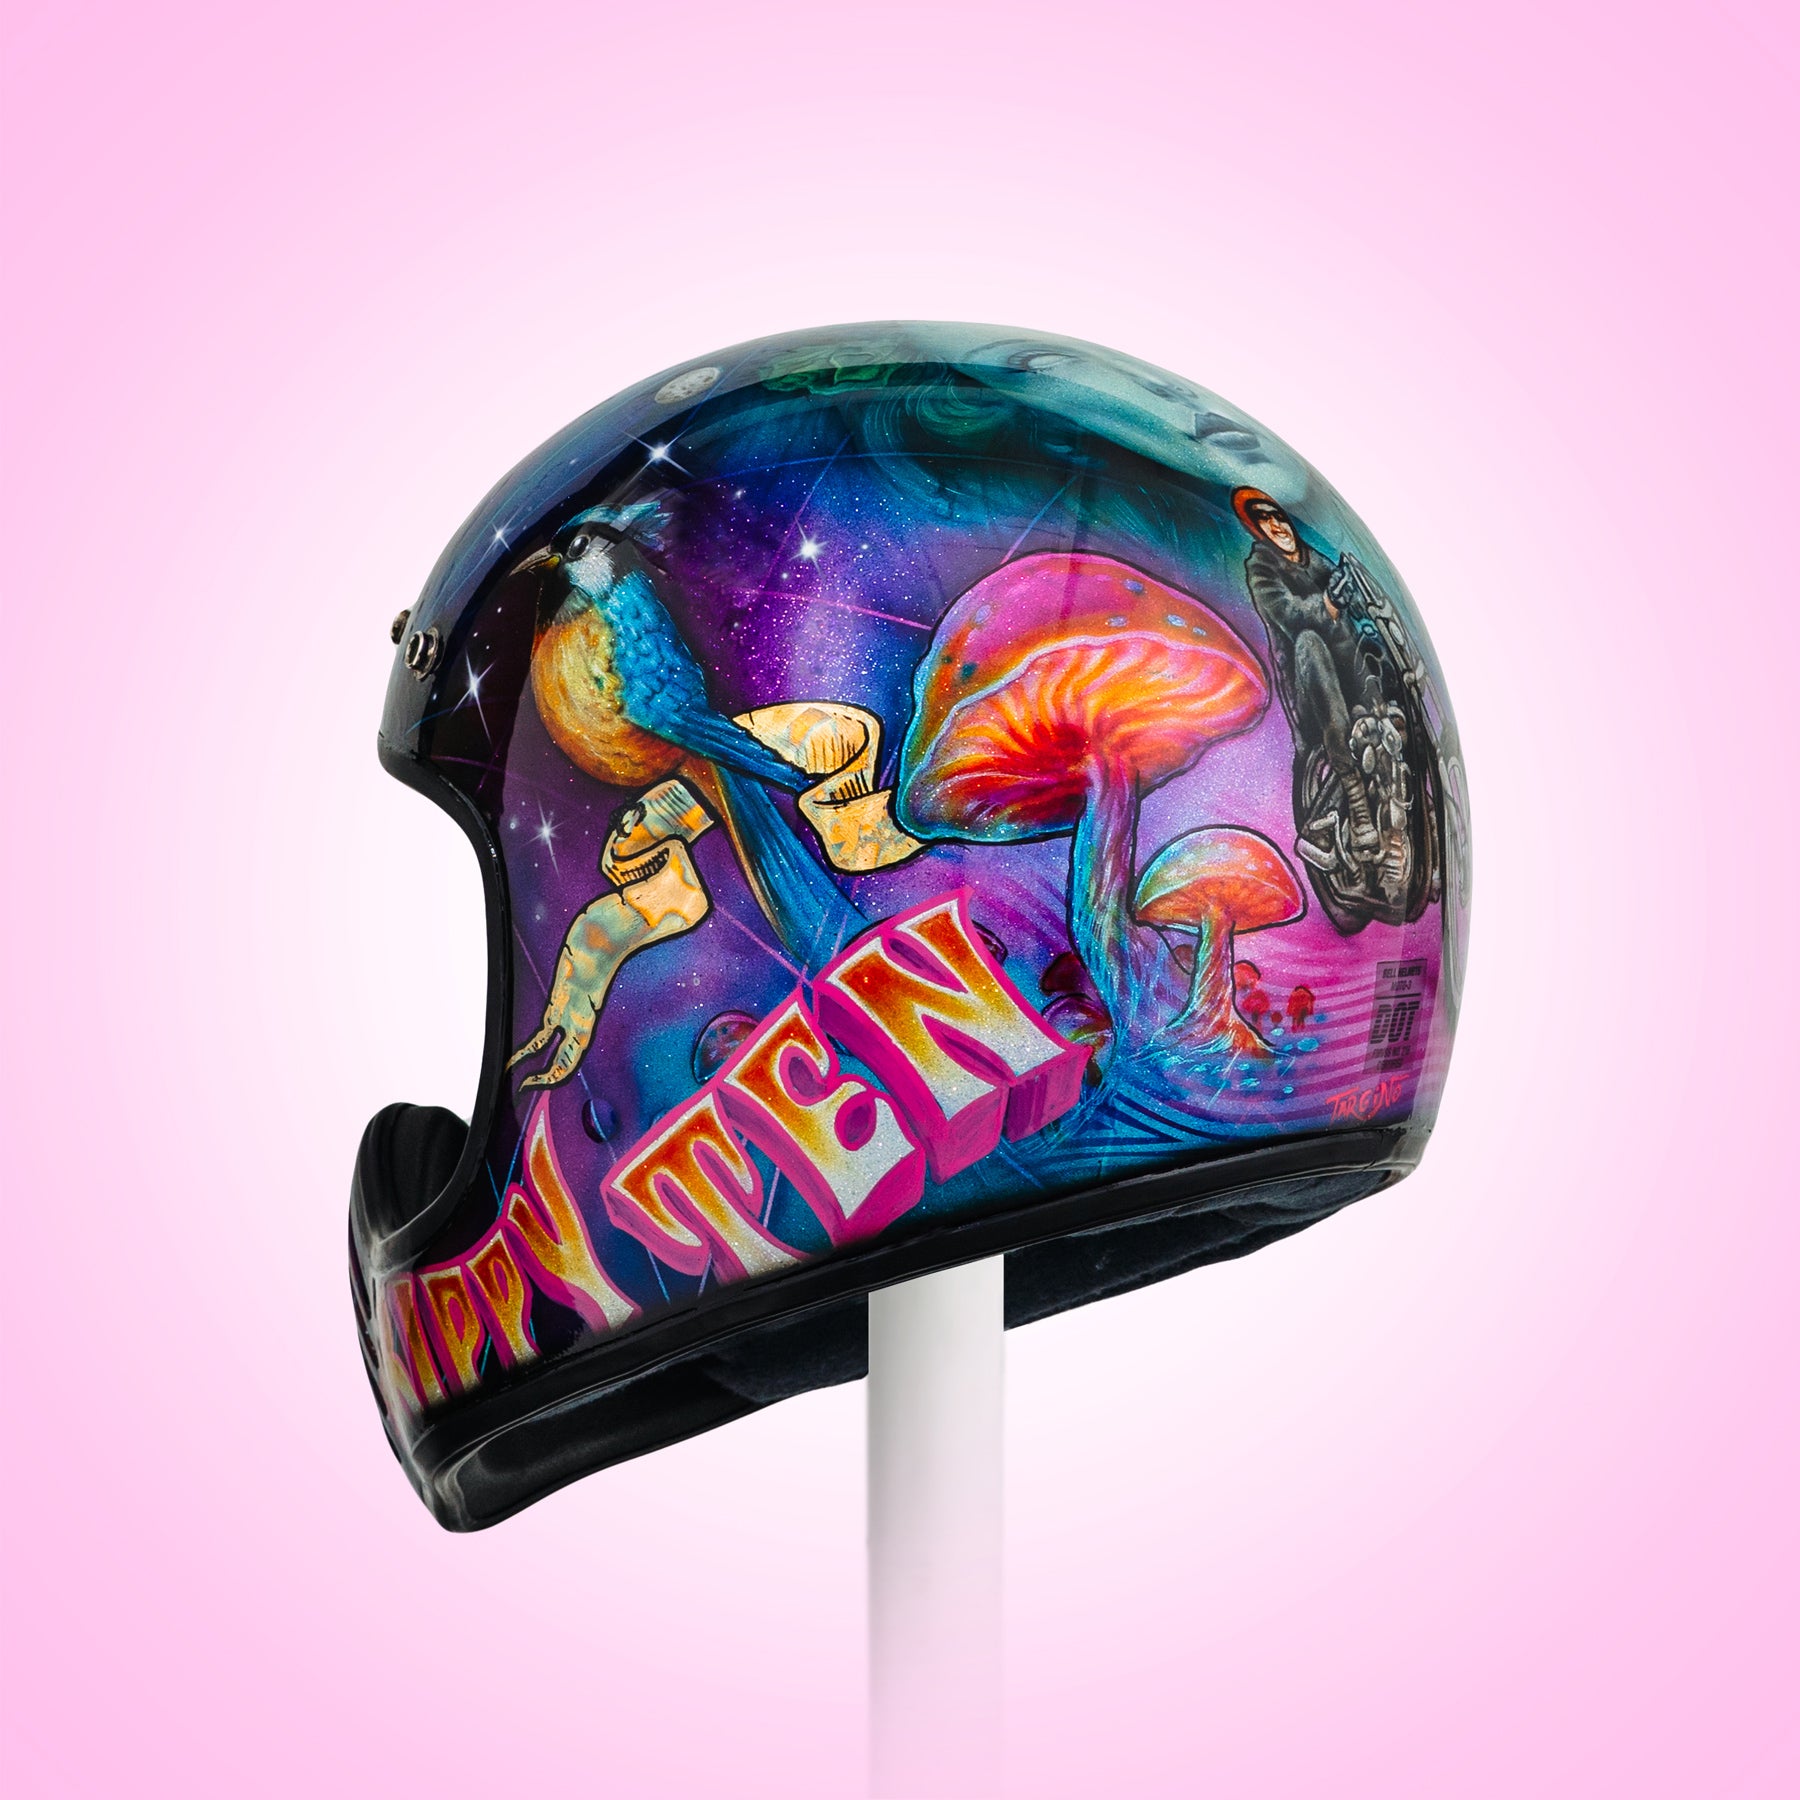 Trippy Ten Helmet Art Show Glory Daze Pittsburgh Ge Targino